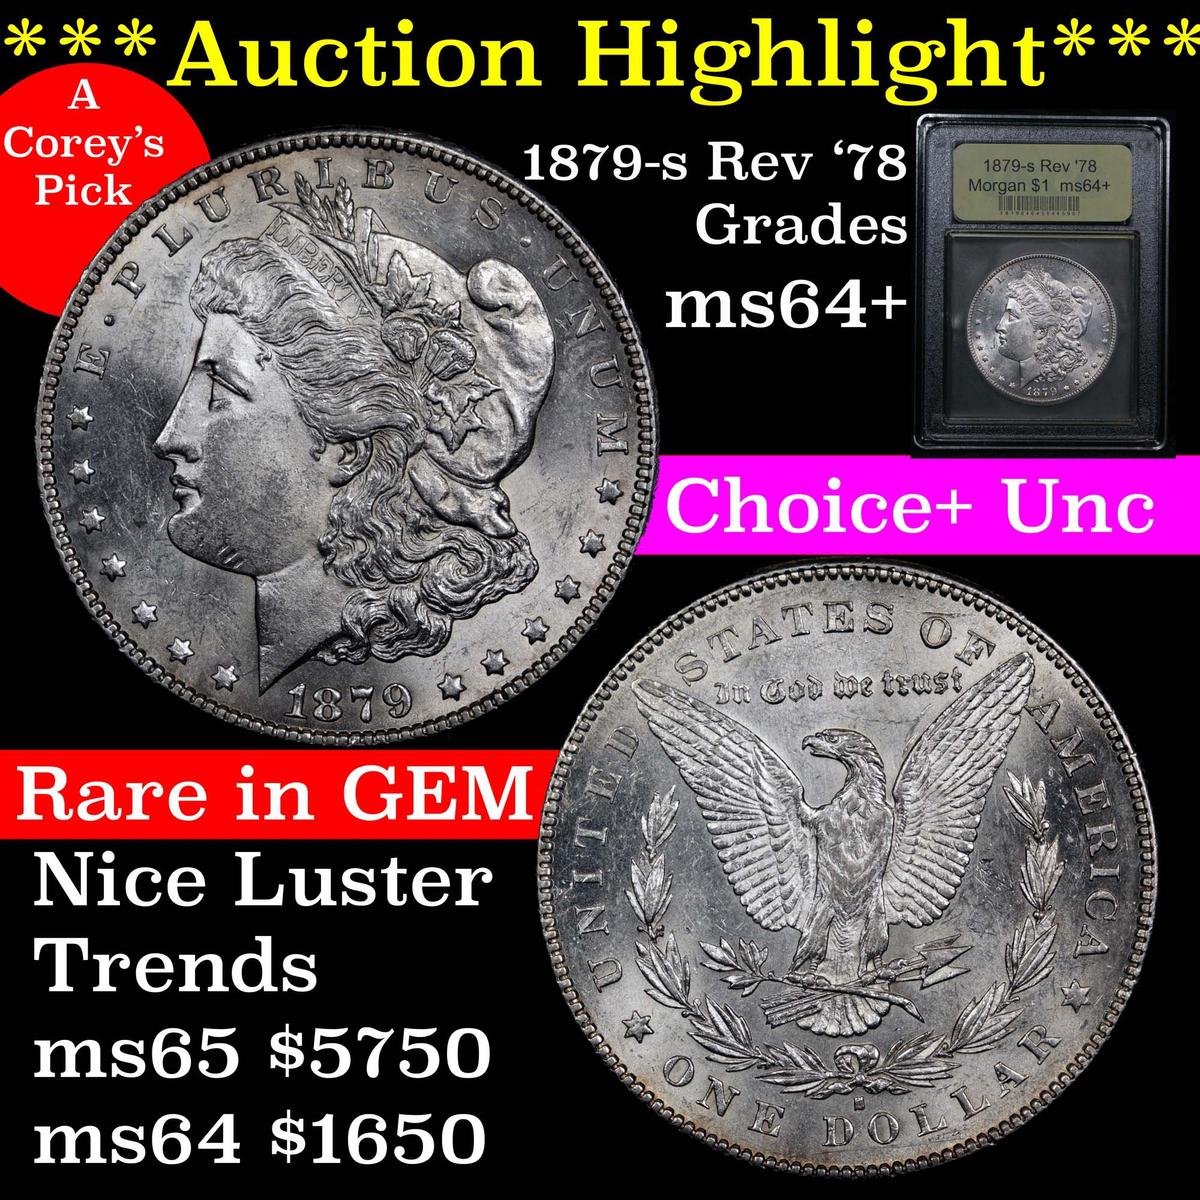 ***Auction Highlight*** ultra rare Top 100 1879-s Rev '78 Morgan Dollar $1 Grades Choice+ Unc (fc)